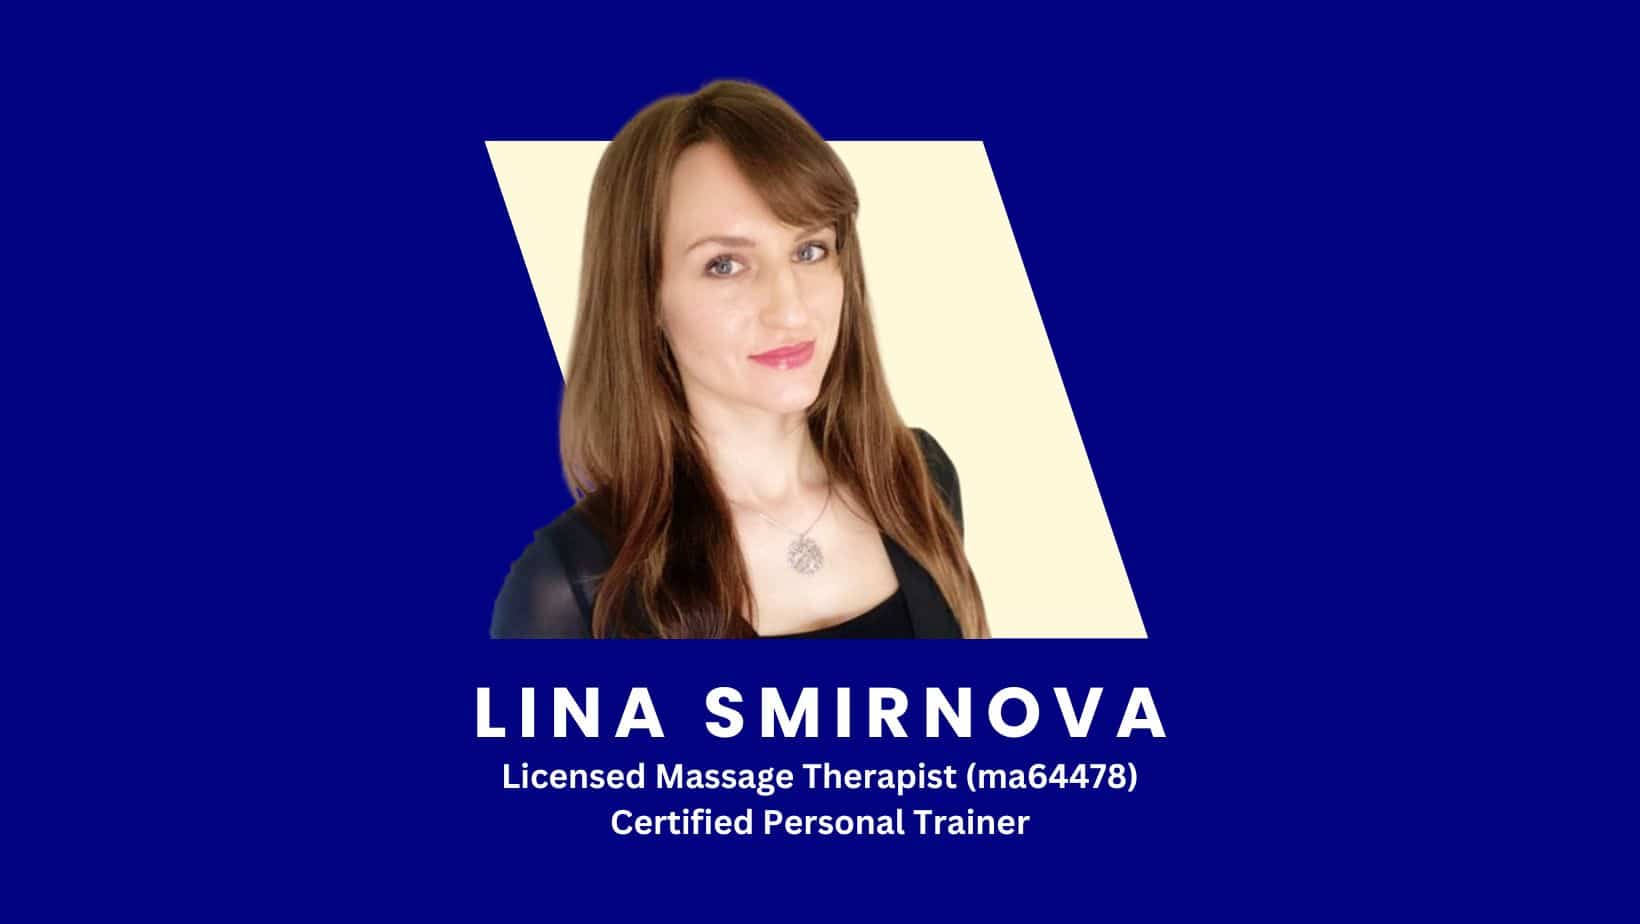 Lina Smirnova mobile massage therapist in Jacksonville